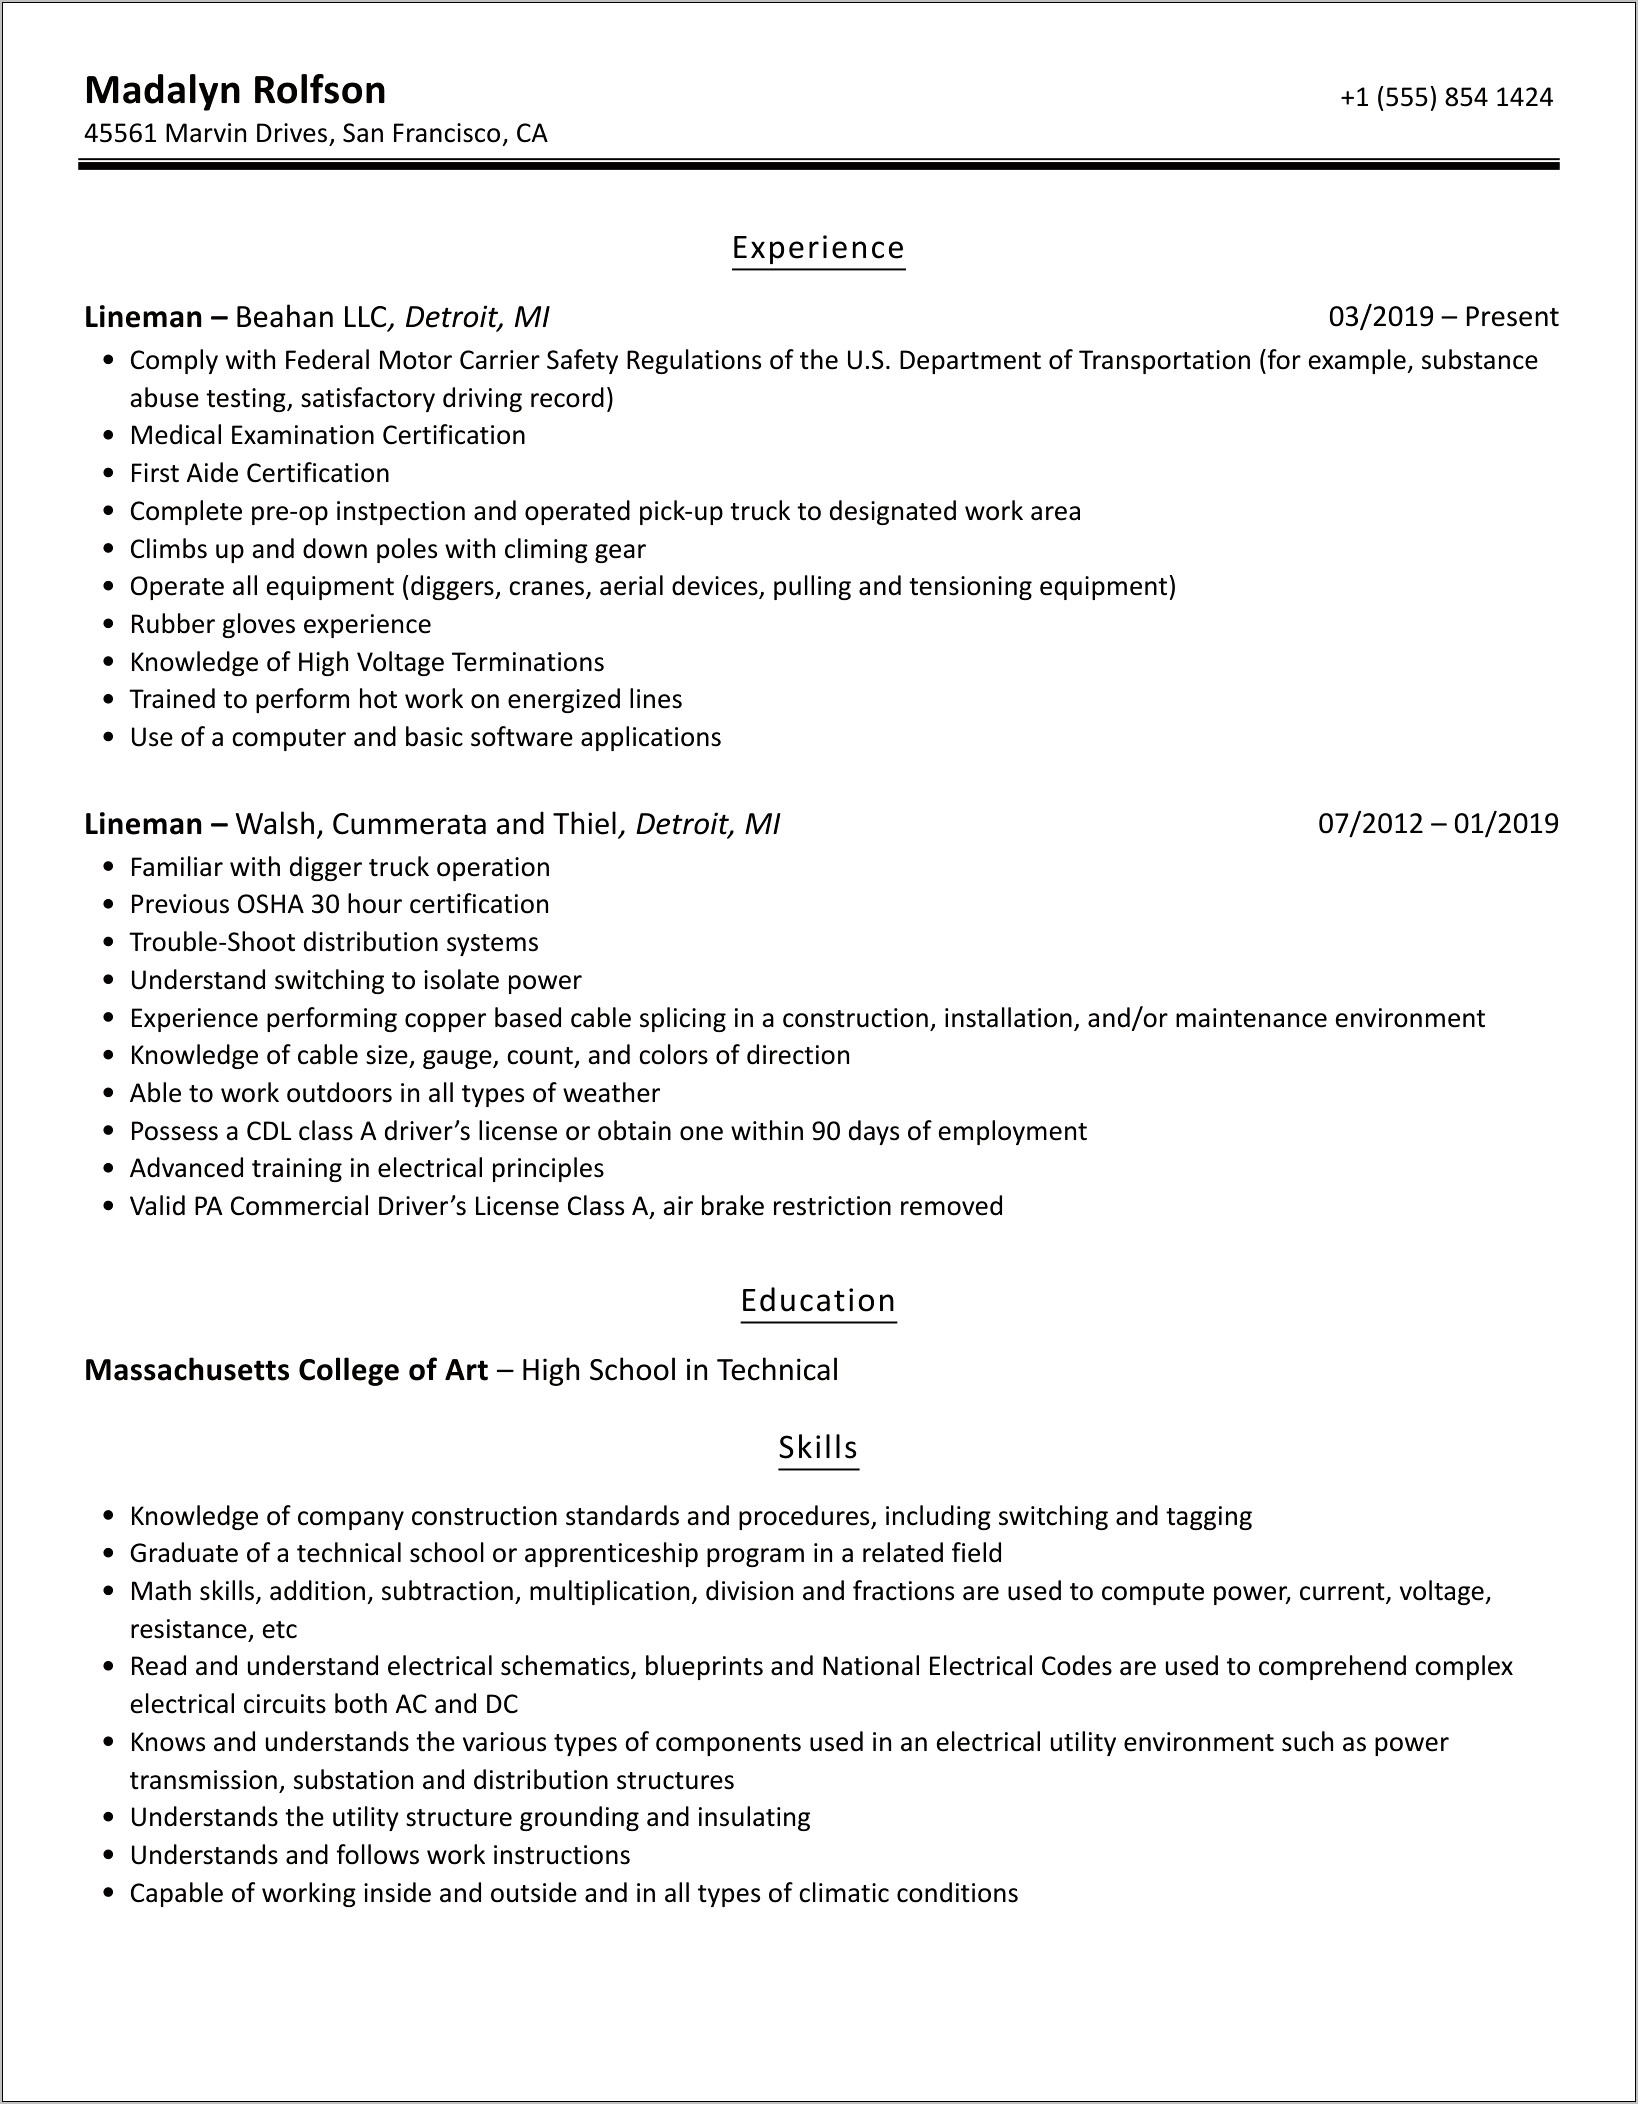 Apprentice Lineman Job Description Resume